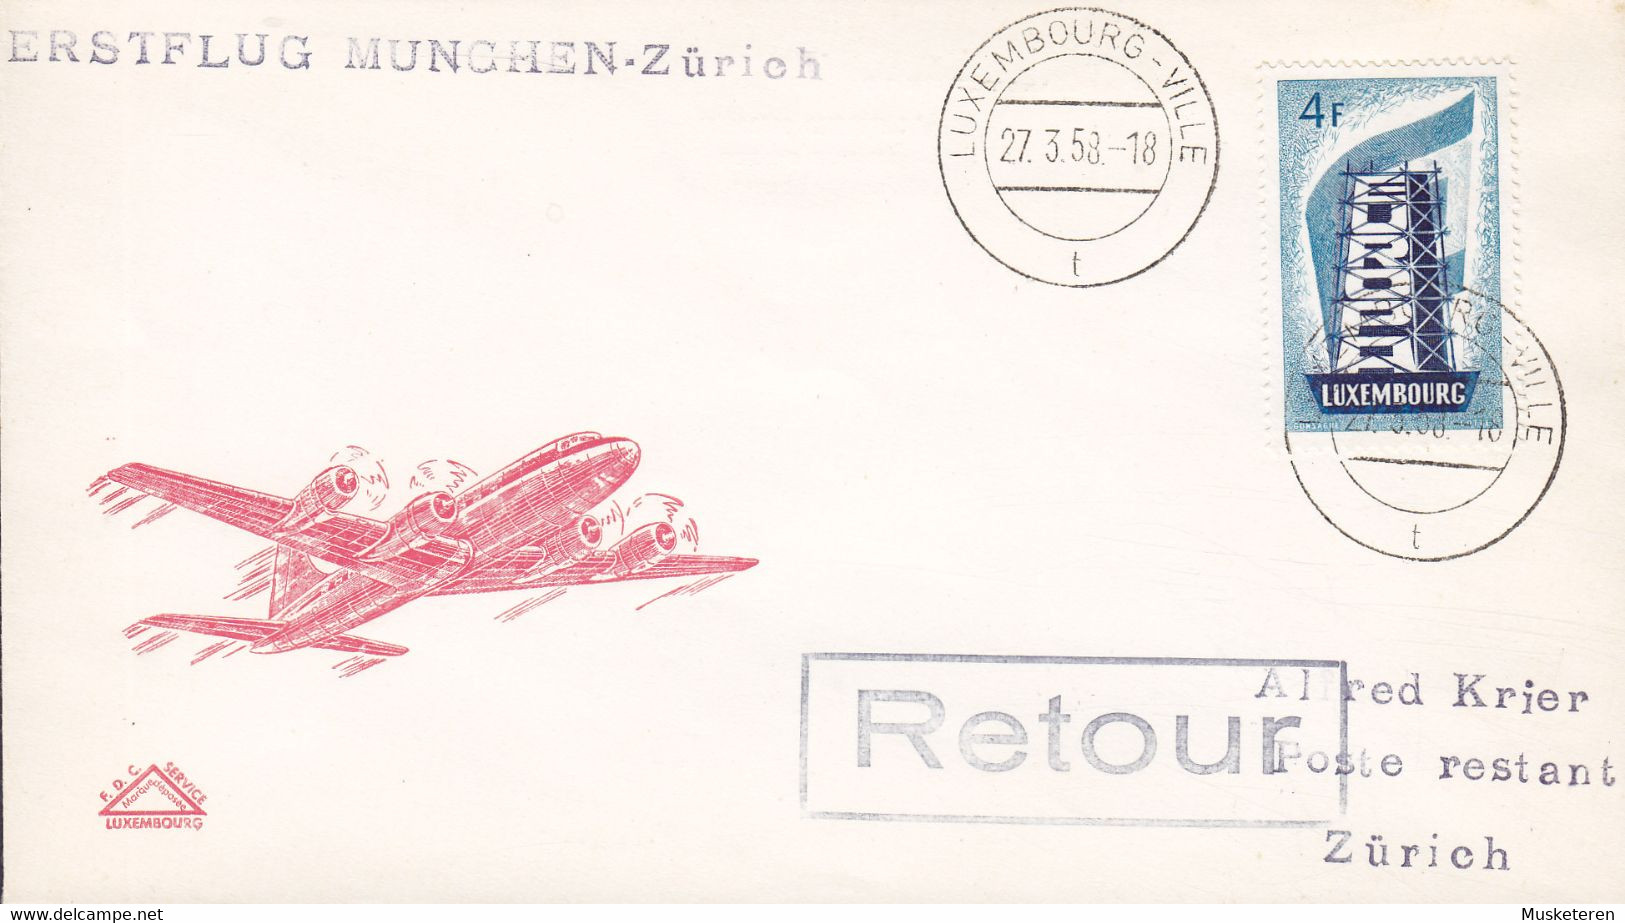 Luxembourg Erstflug First Flight Premiére Liason MÜNCHEN - ZÜRICH 1958 Cover Lettre 4 Fr. Europa CEPT Timbre (2 Scans) - Covers & Documents